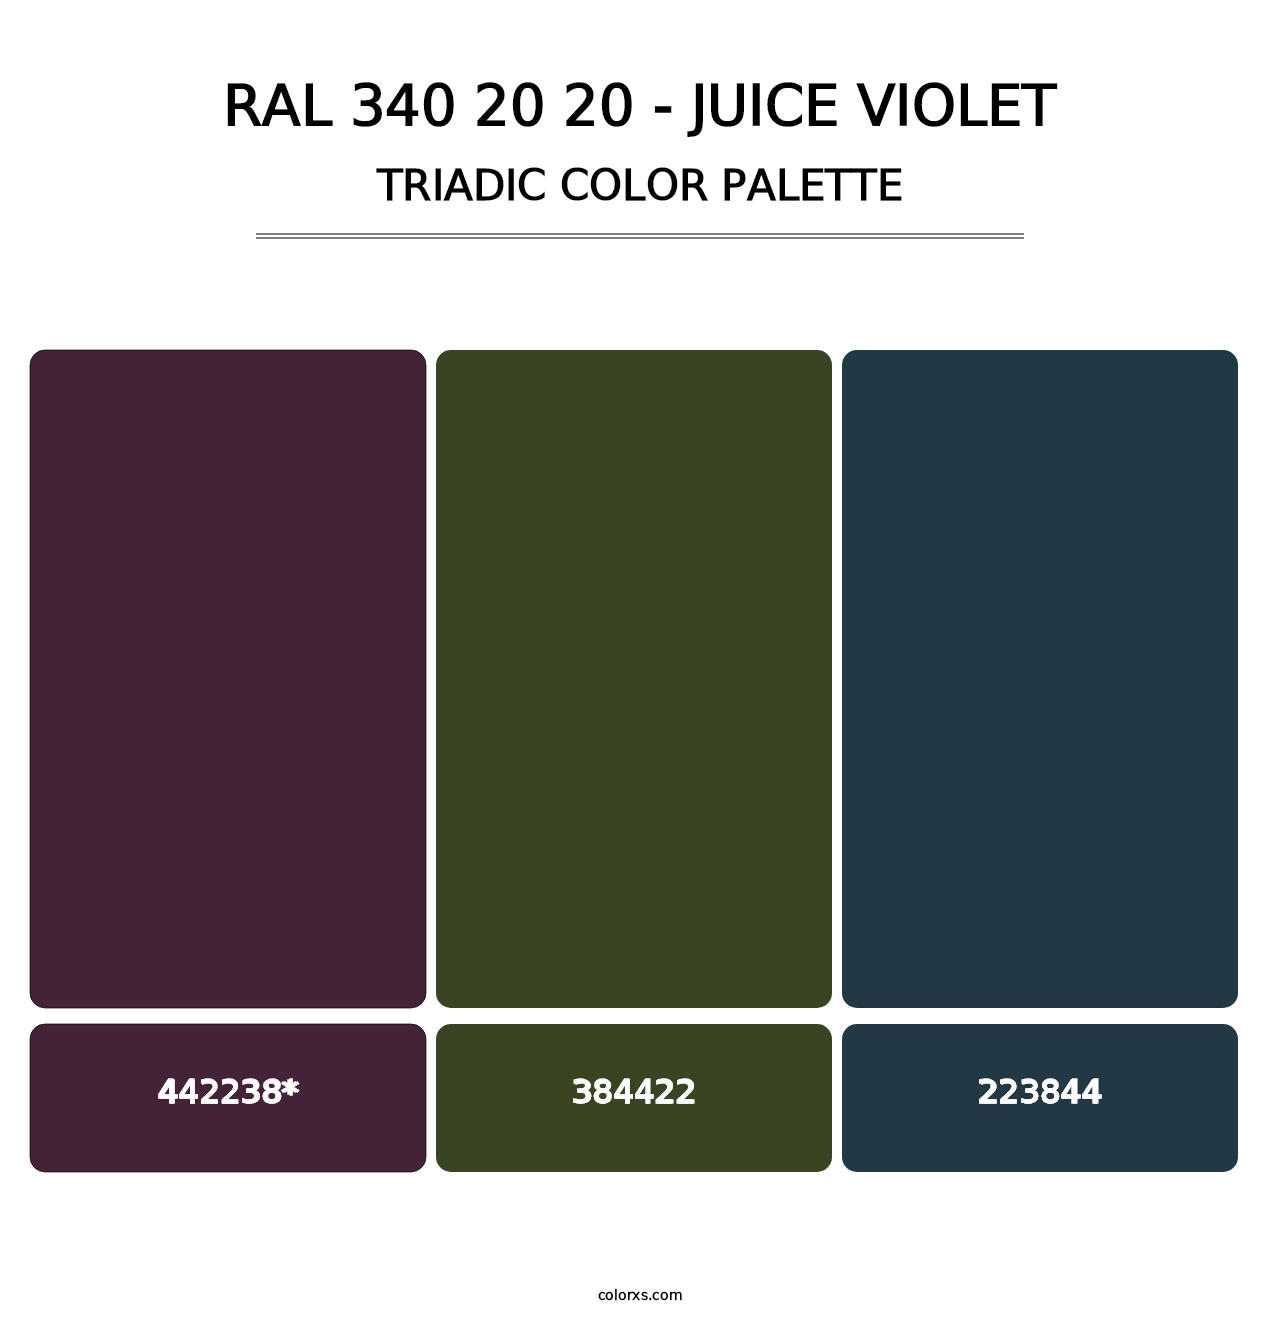 RAL 340 20 20 - Juice Violet - Triadic Color Palette